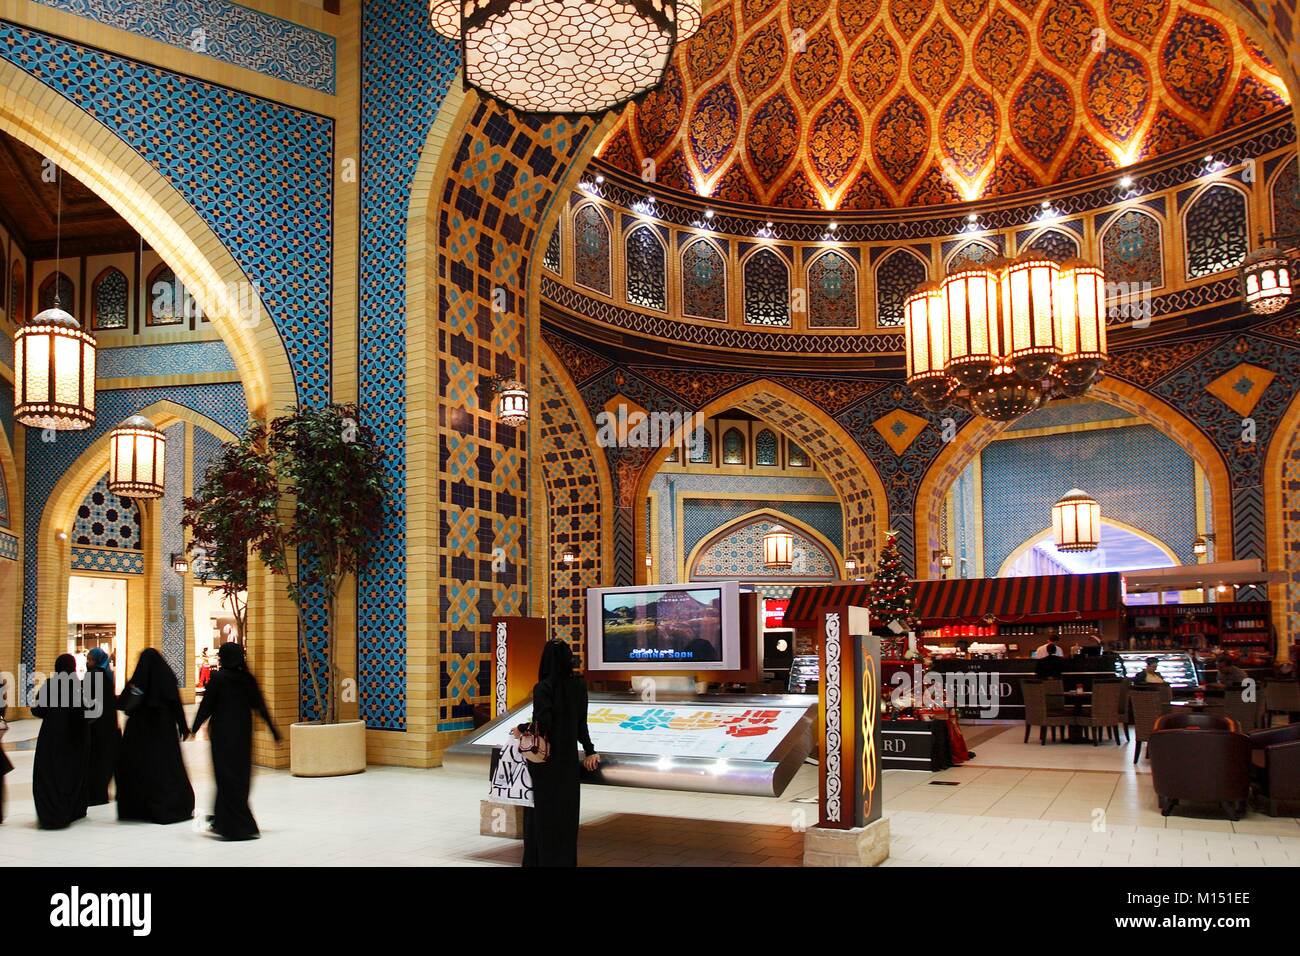 Emirats arabes unis, dubaï, Ibn Battuta Mall, Perse salon Banque D'Images